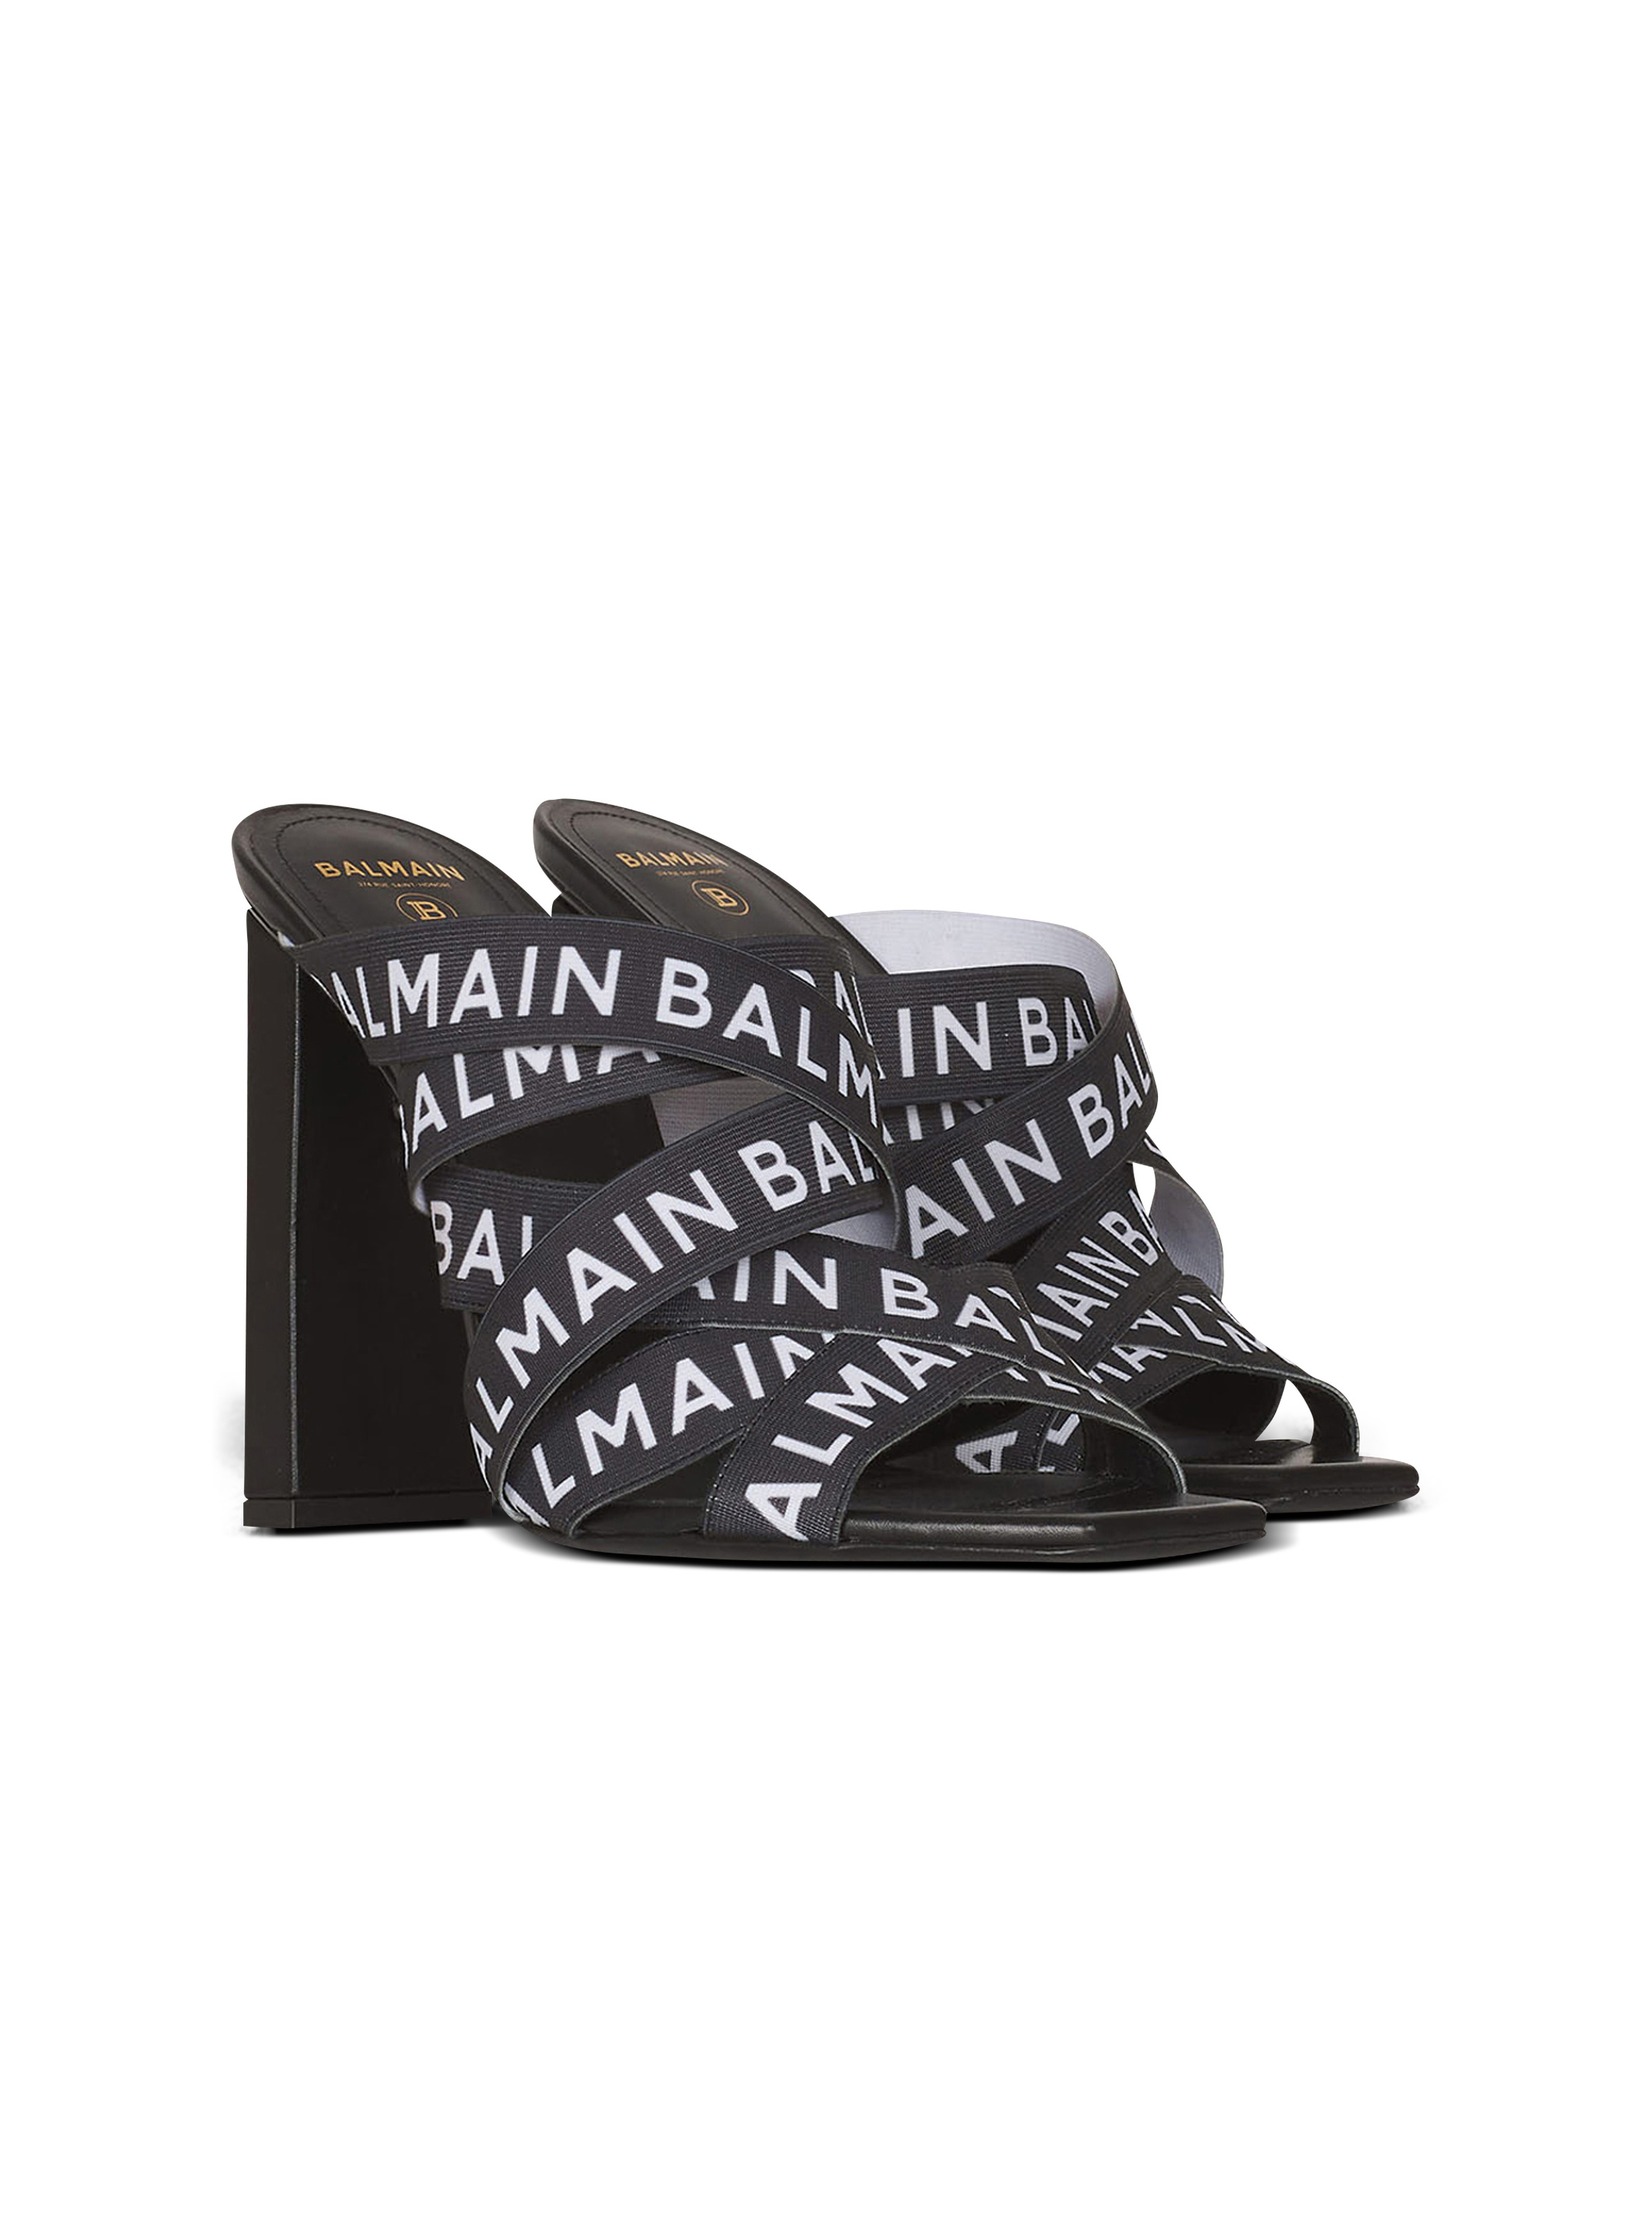 Union sandals with Balmain logo print - 2